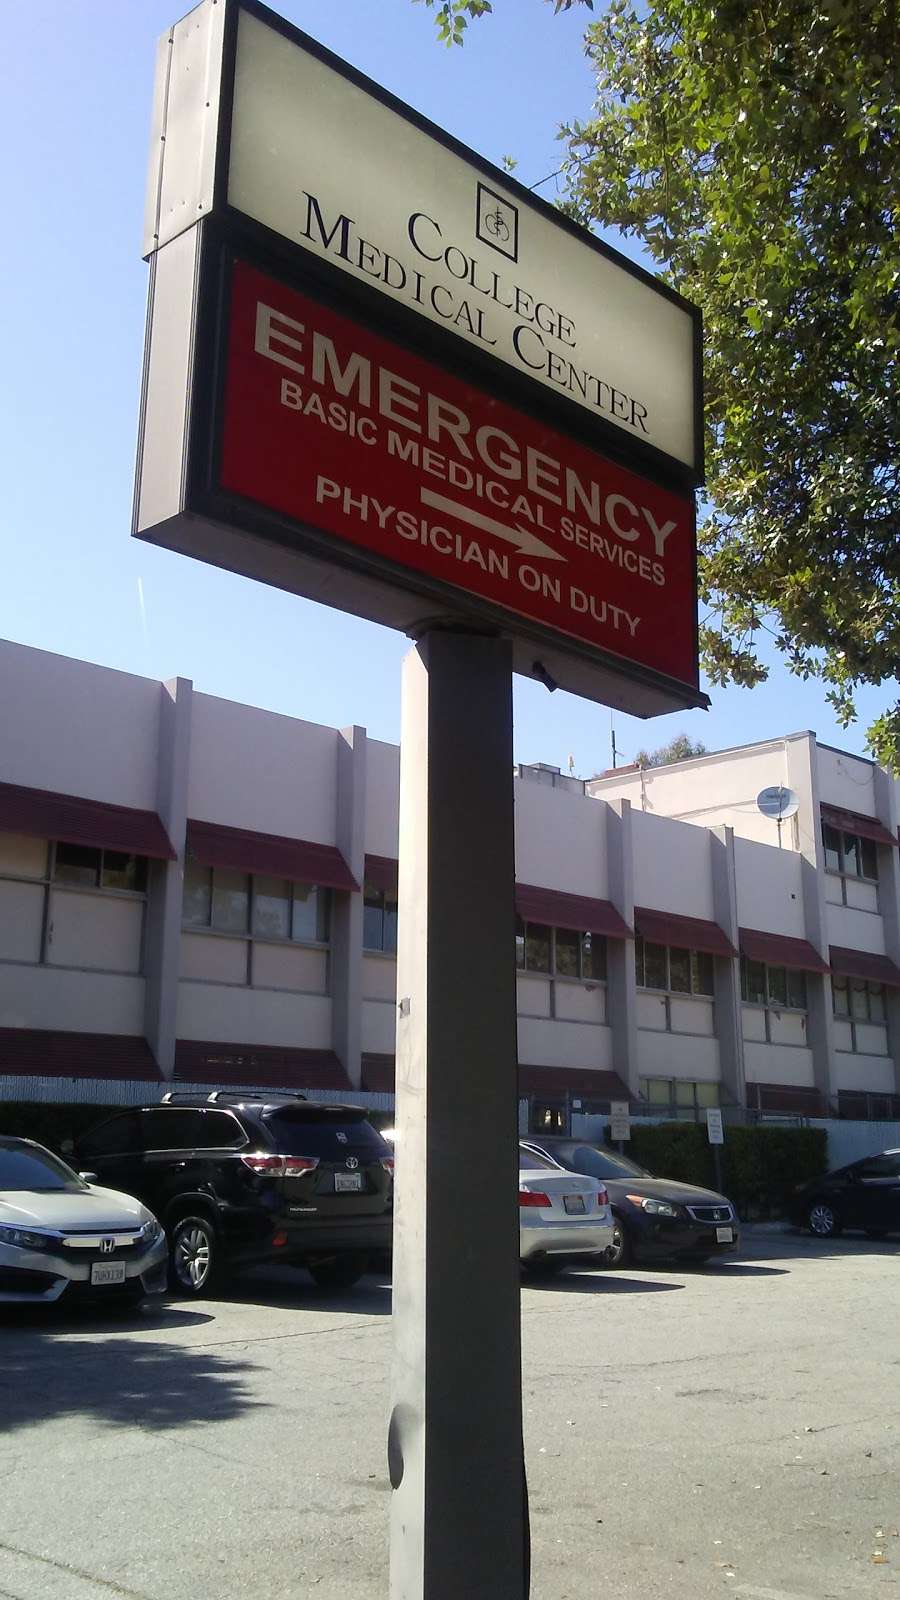 College Medical Center | 2776 Pacific Avenue, Long Beach, CA 90806, USA | Phone: (562) 997-2000